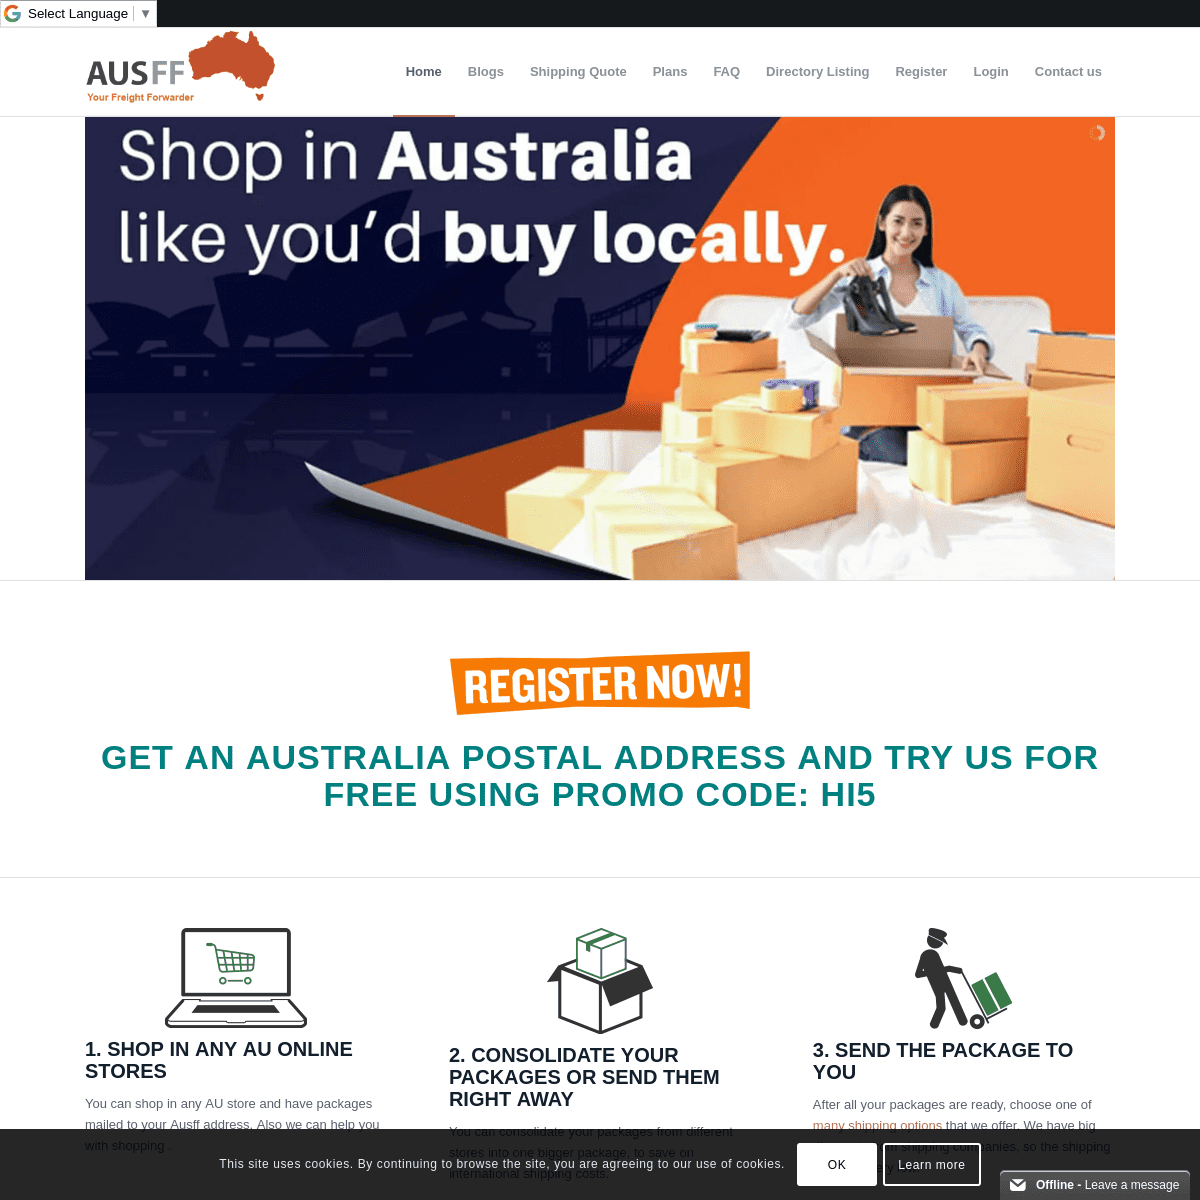 A complete backup of ausff.com.au